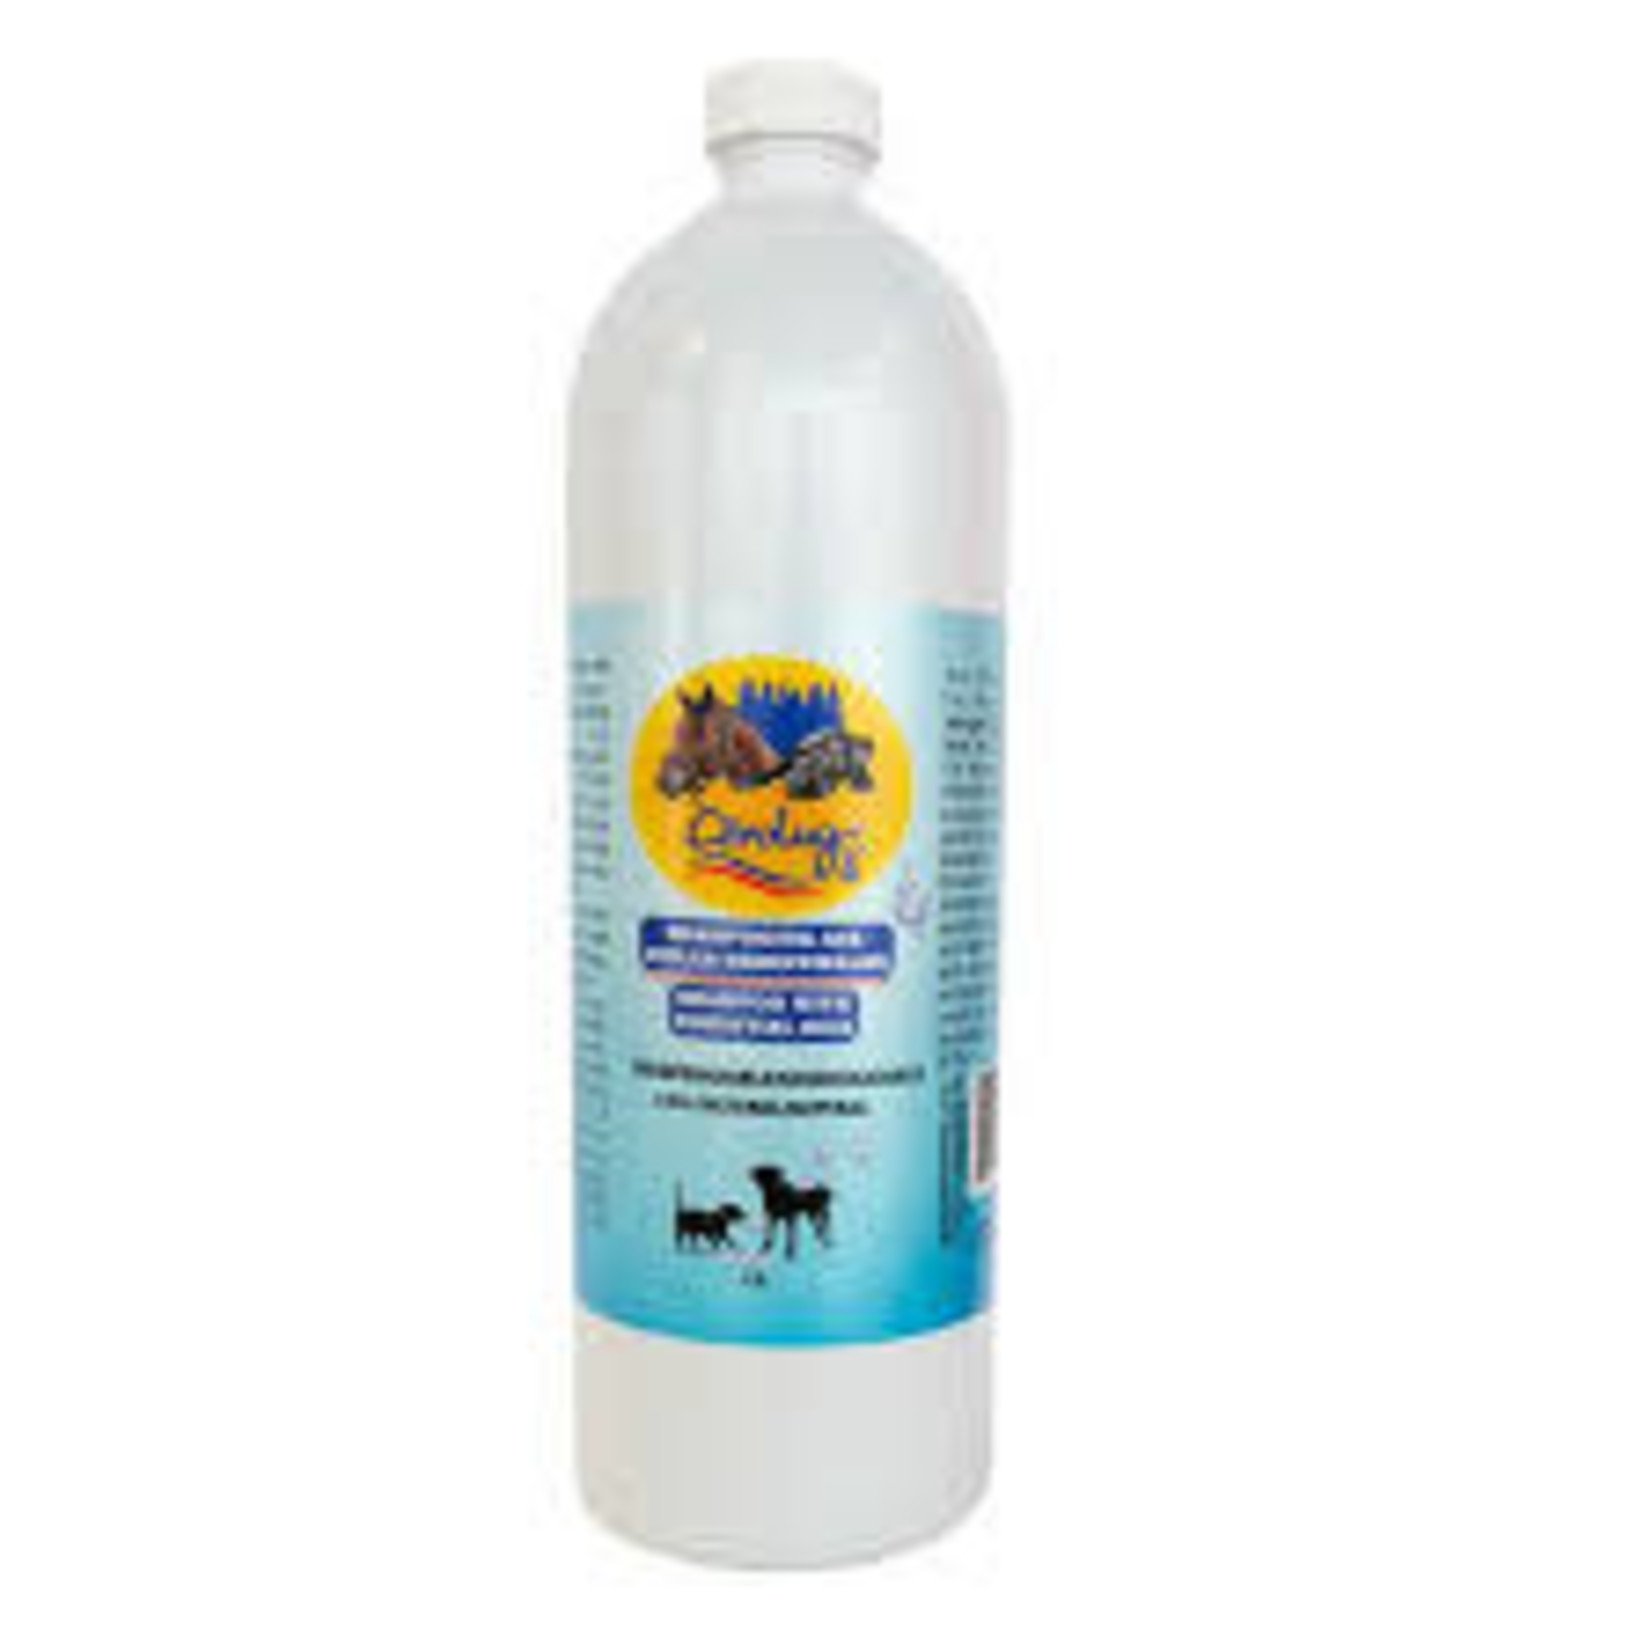 Citrobug Shampoo for Dogs & Horses 1L